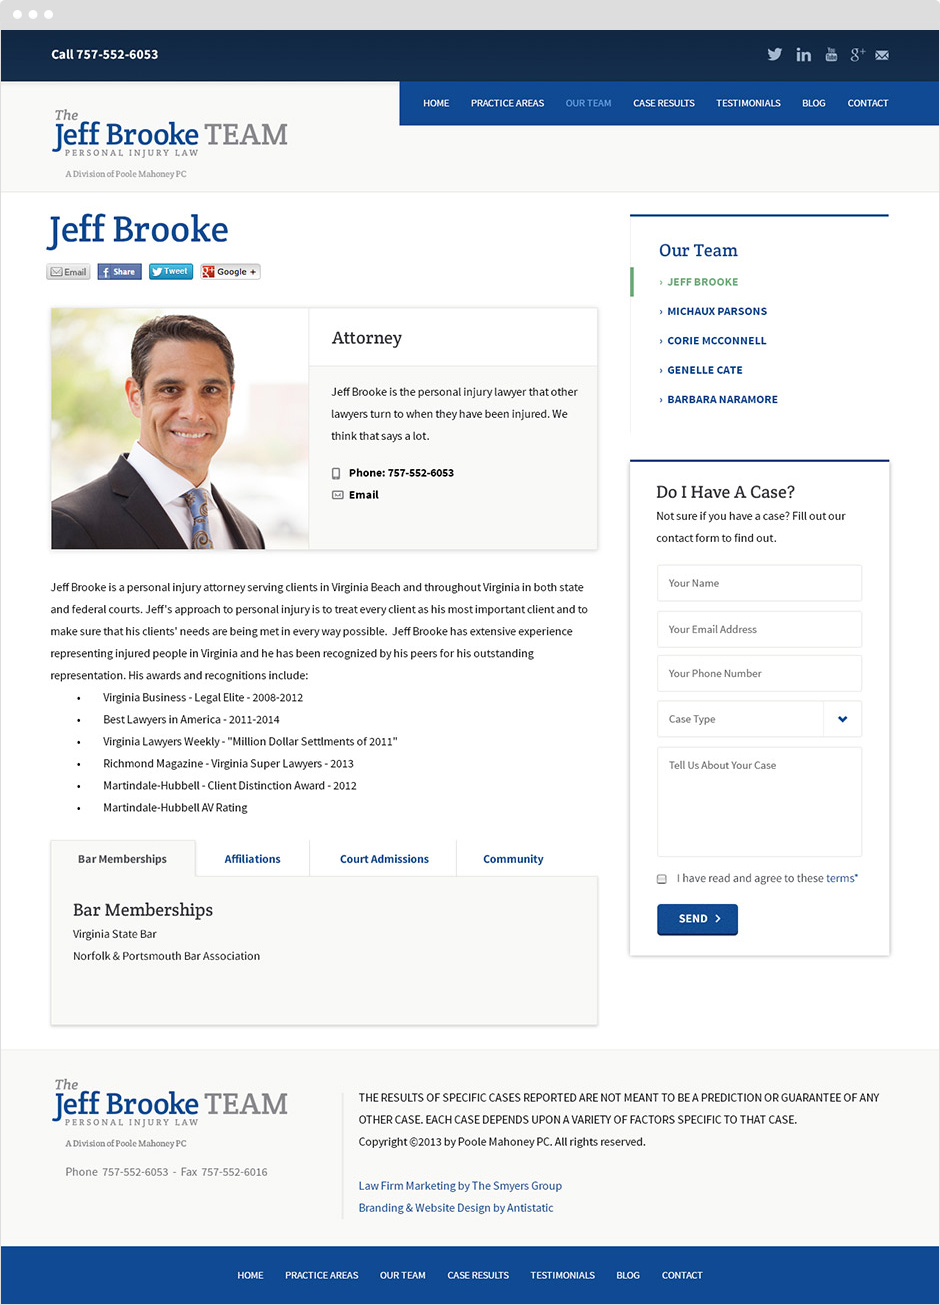 Jeff Brooke Team Homepage Design